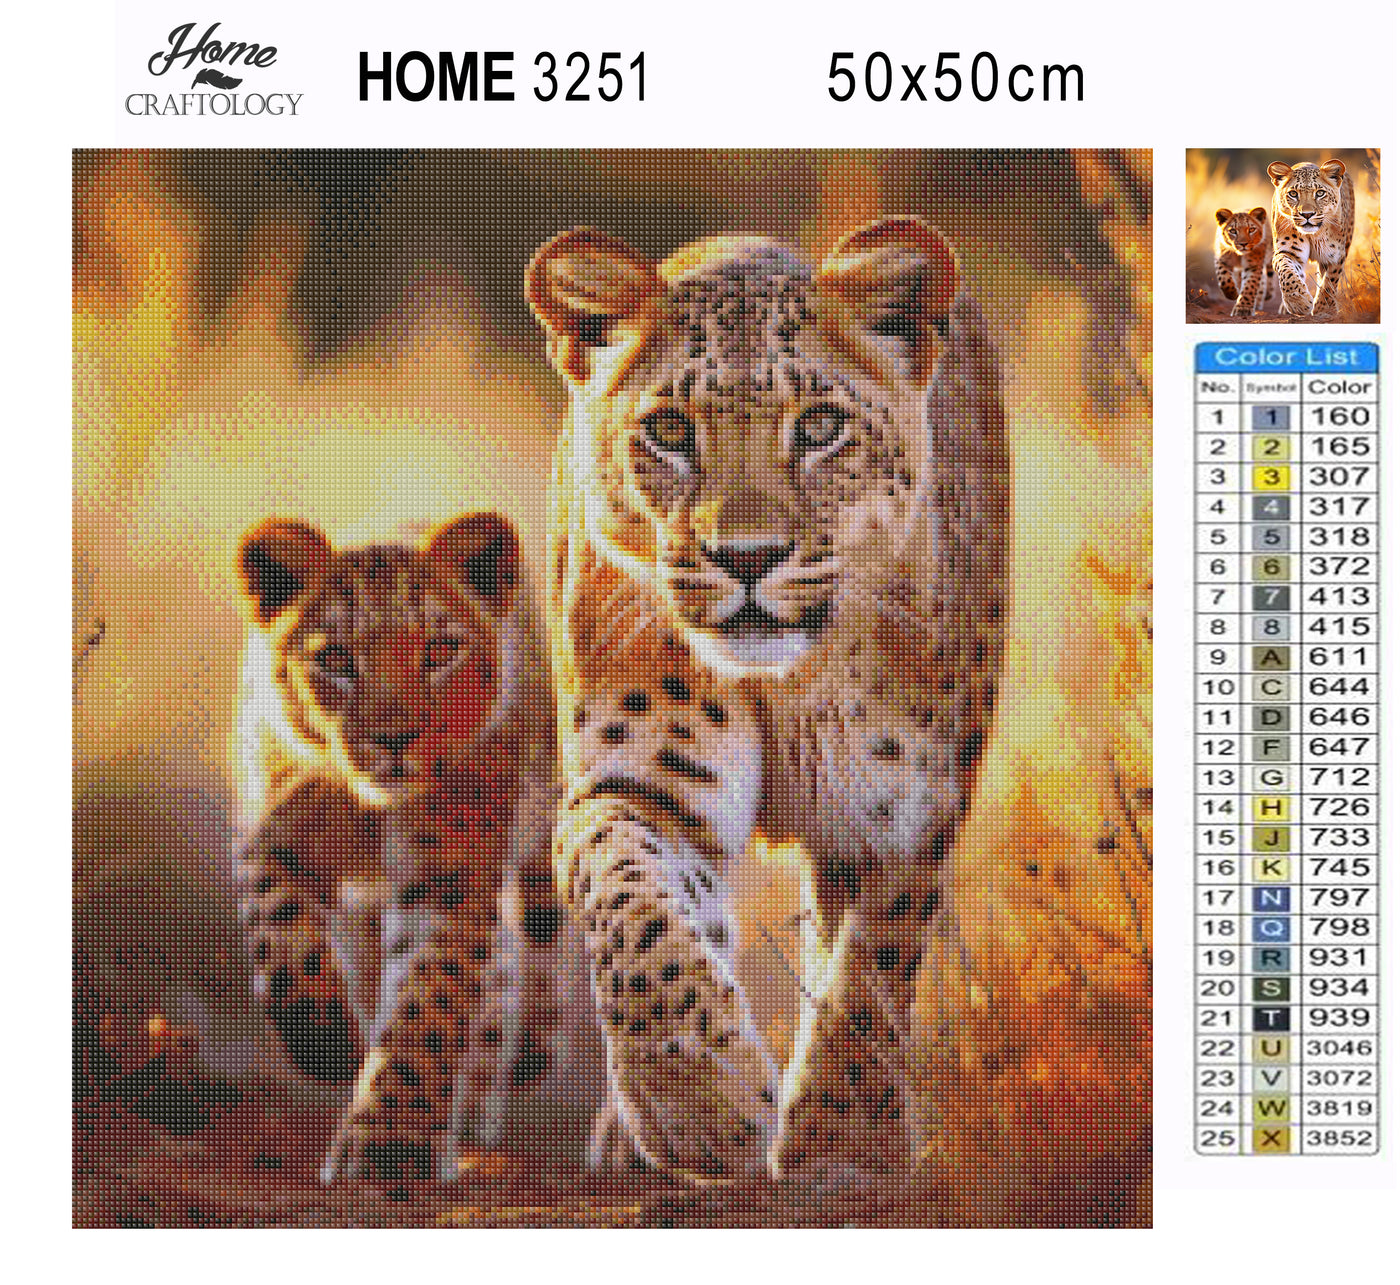 Pair of Leopards - Premium Diamond Painting Kit